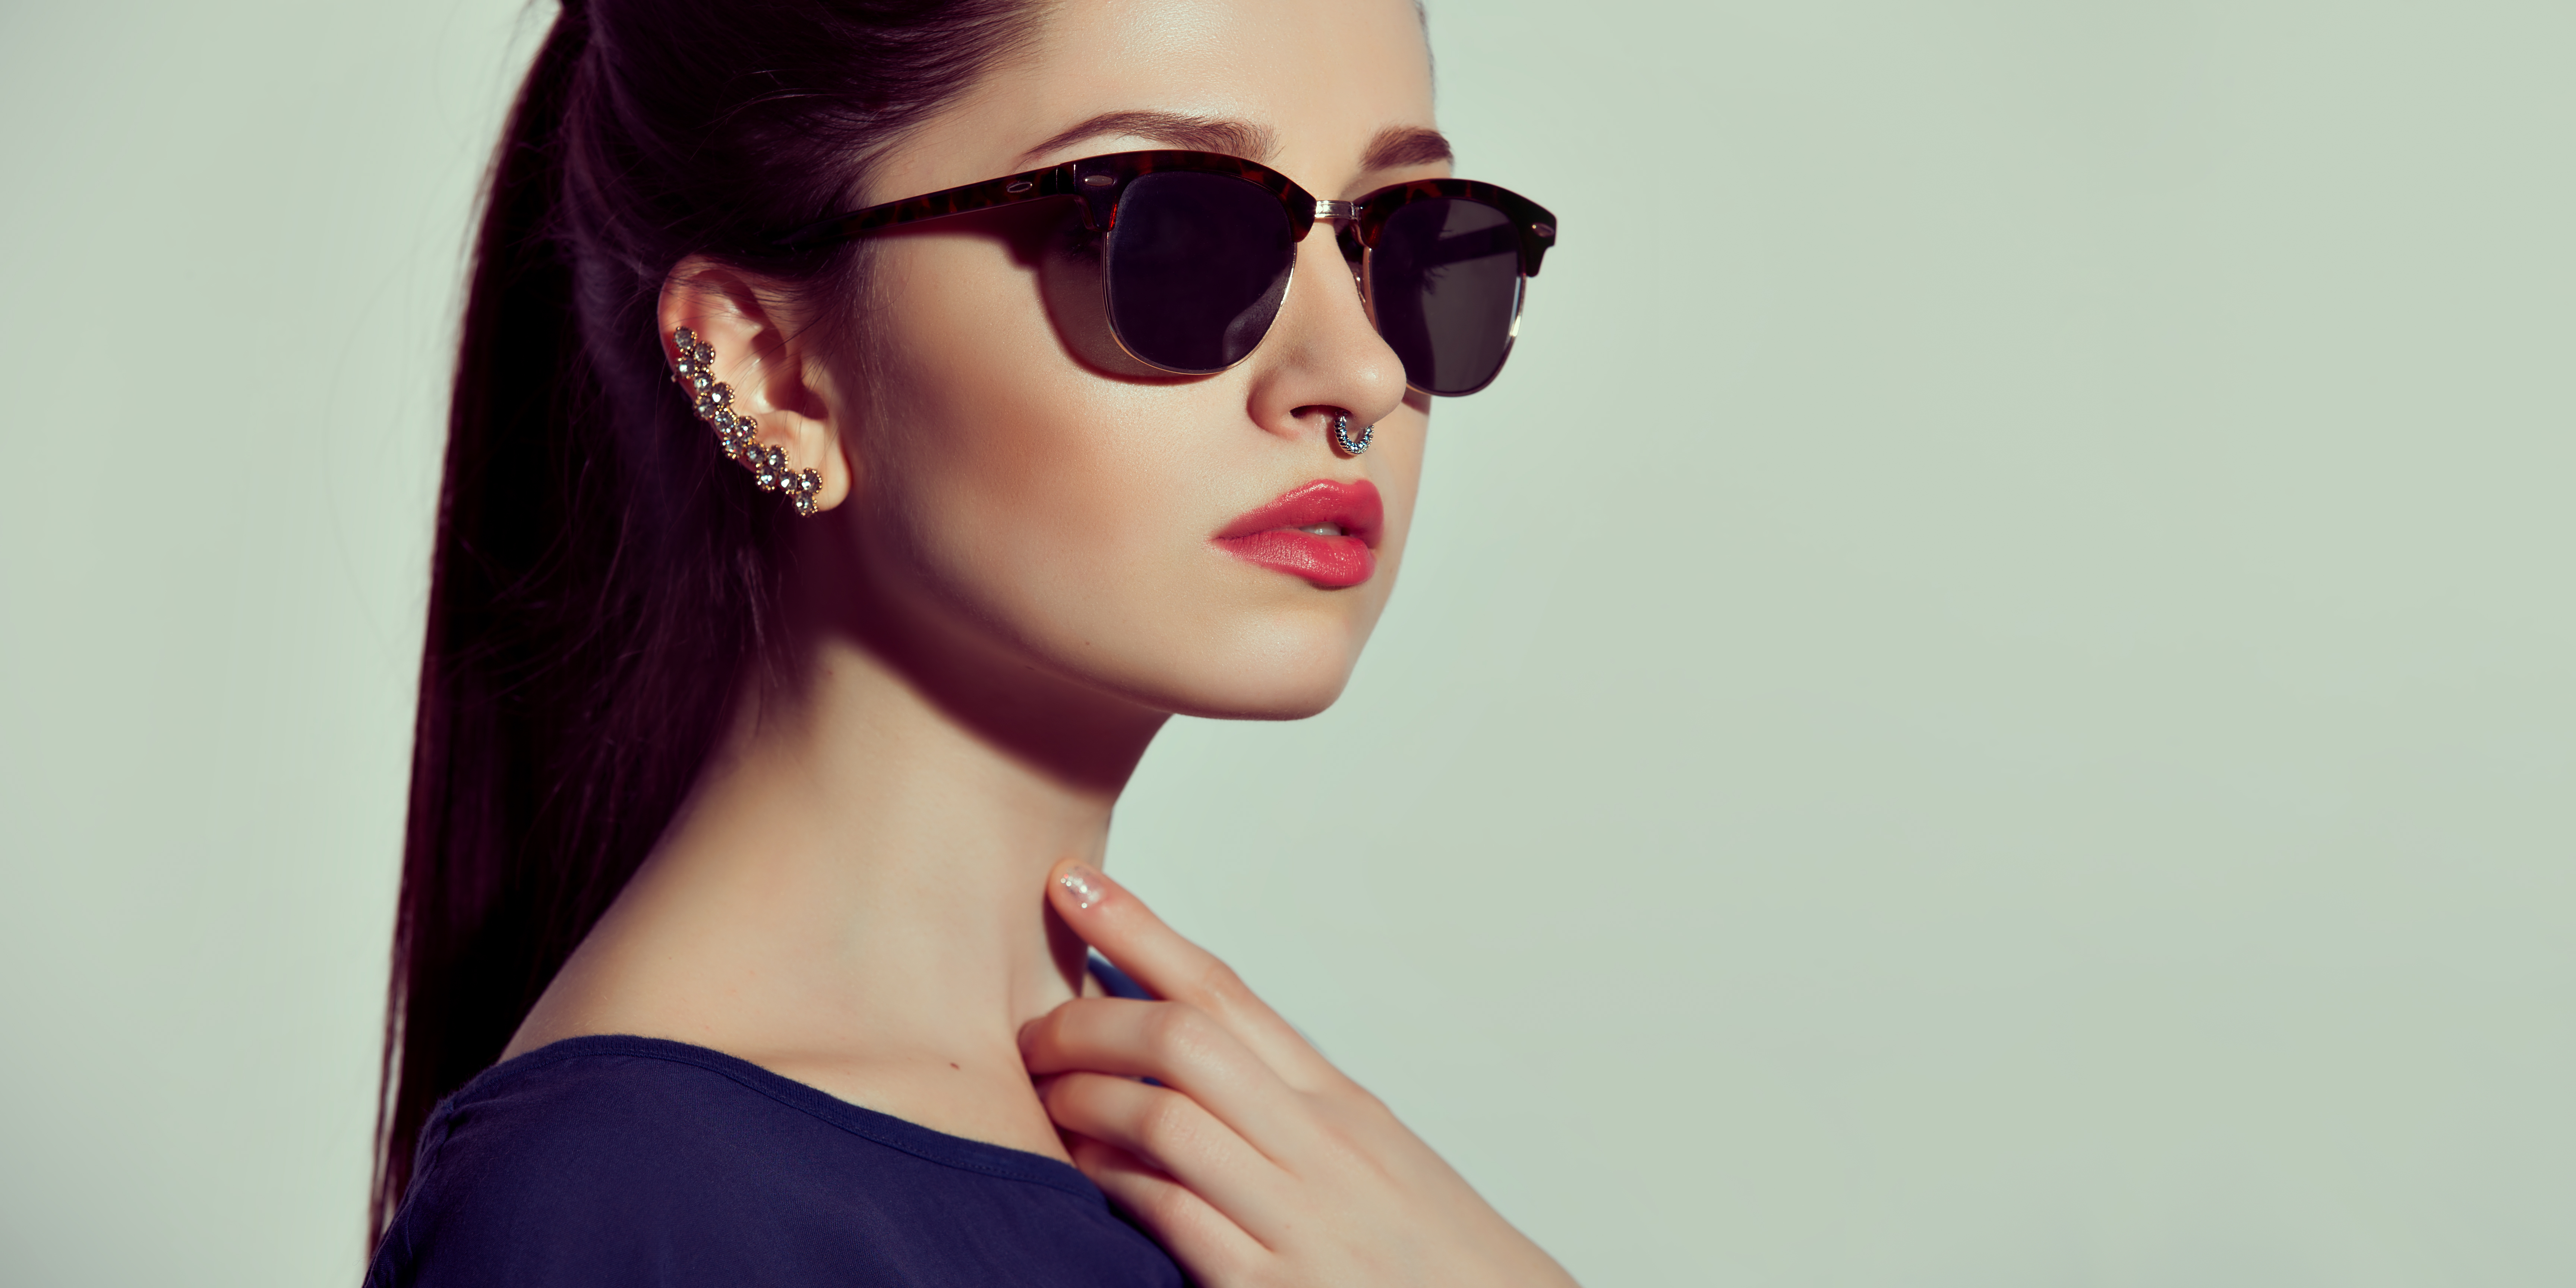 Woman with multiple piercings. | Source: Shutterstock